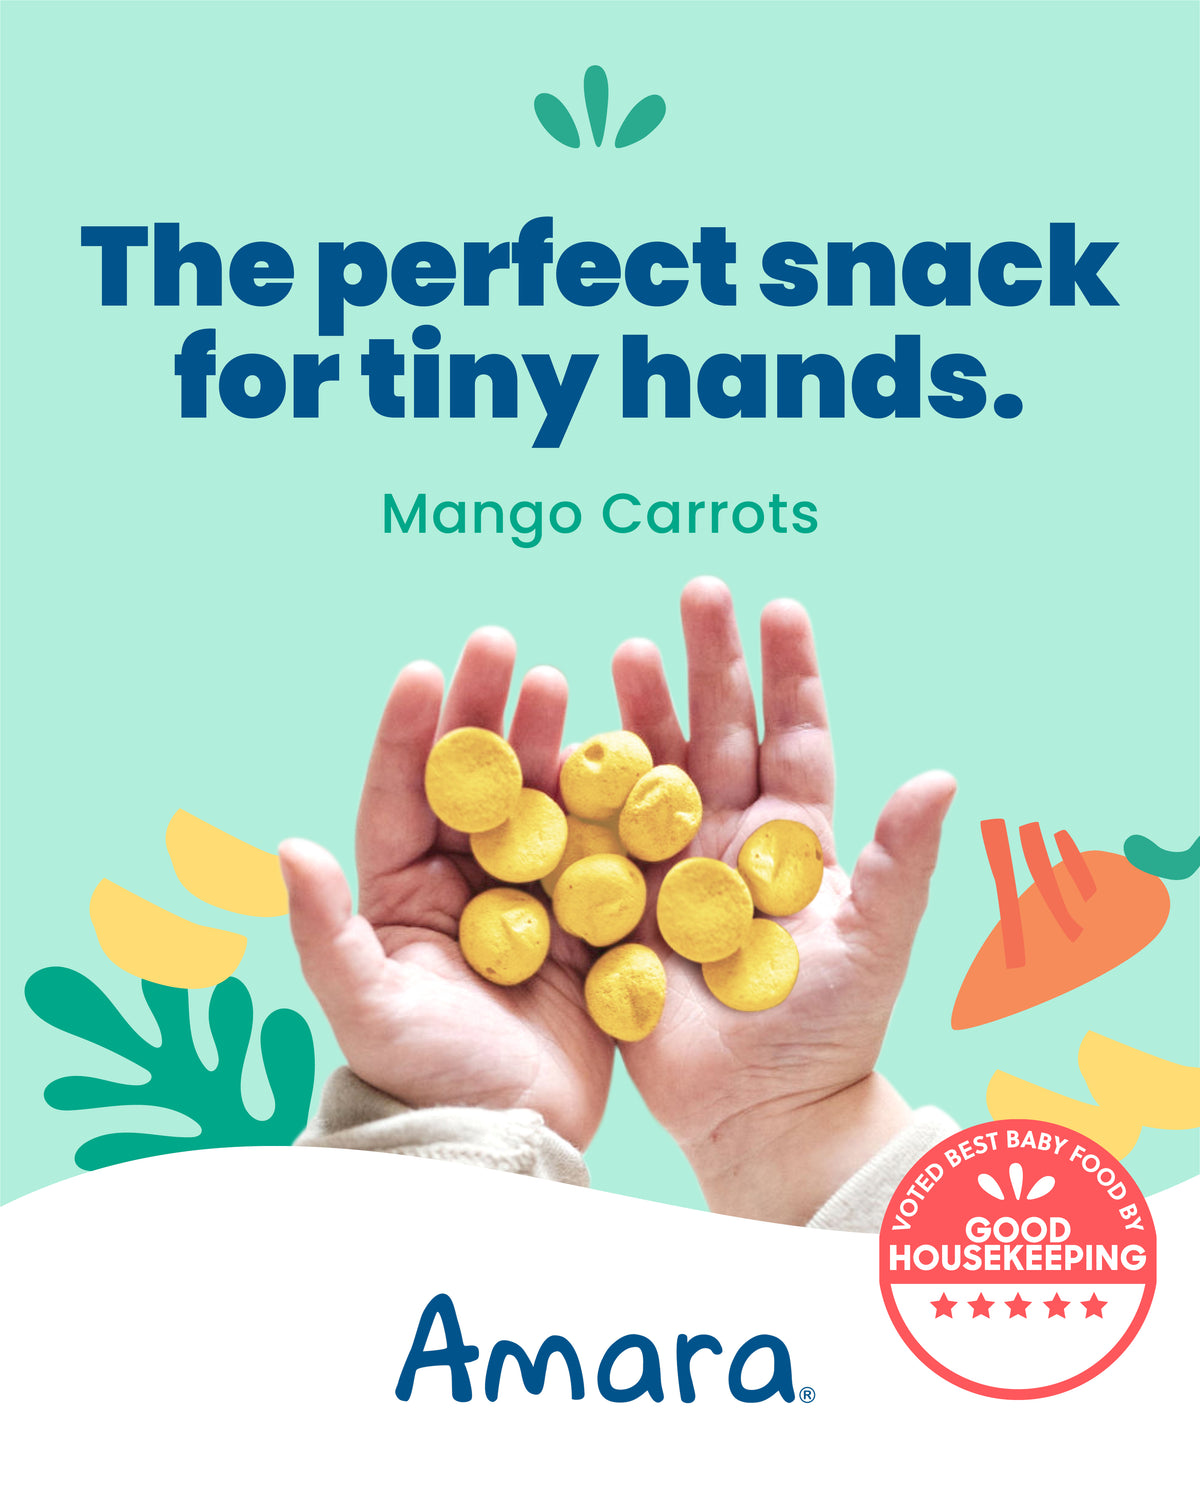 Mango Carrots